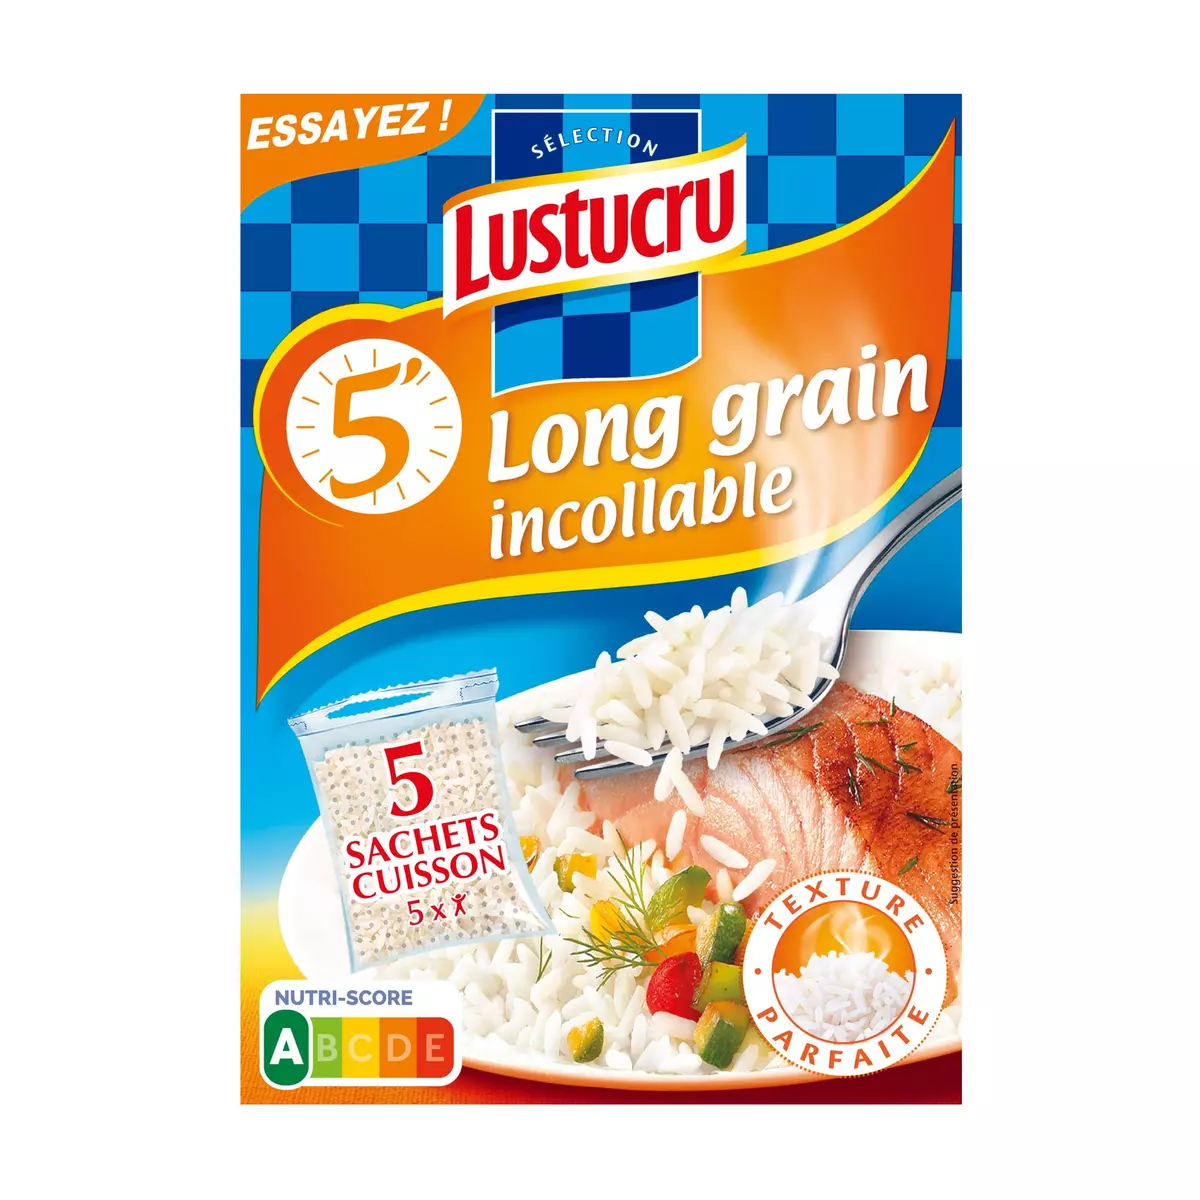 LUSTUCRU Riz long grain incollable sachets cuisson rapide 5 x 5 portions 450g